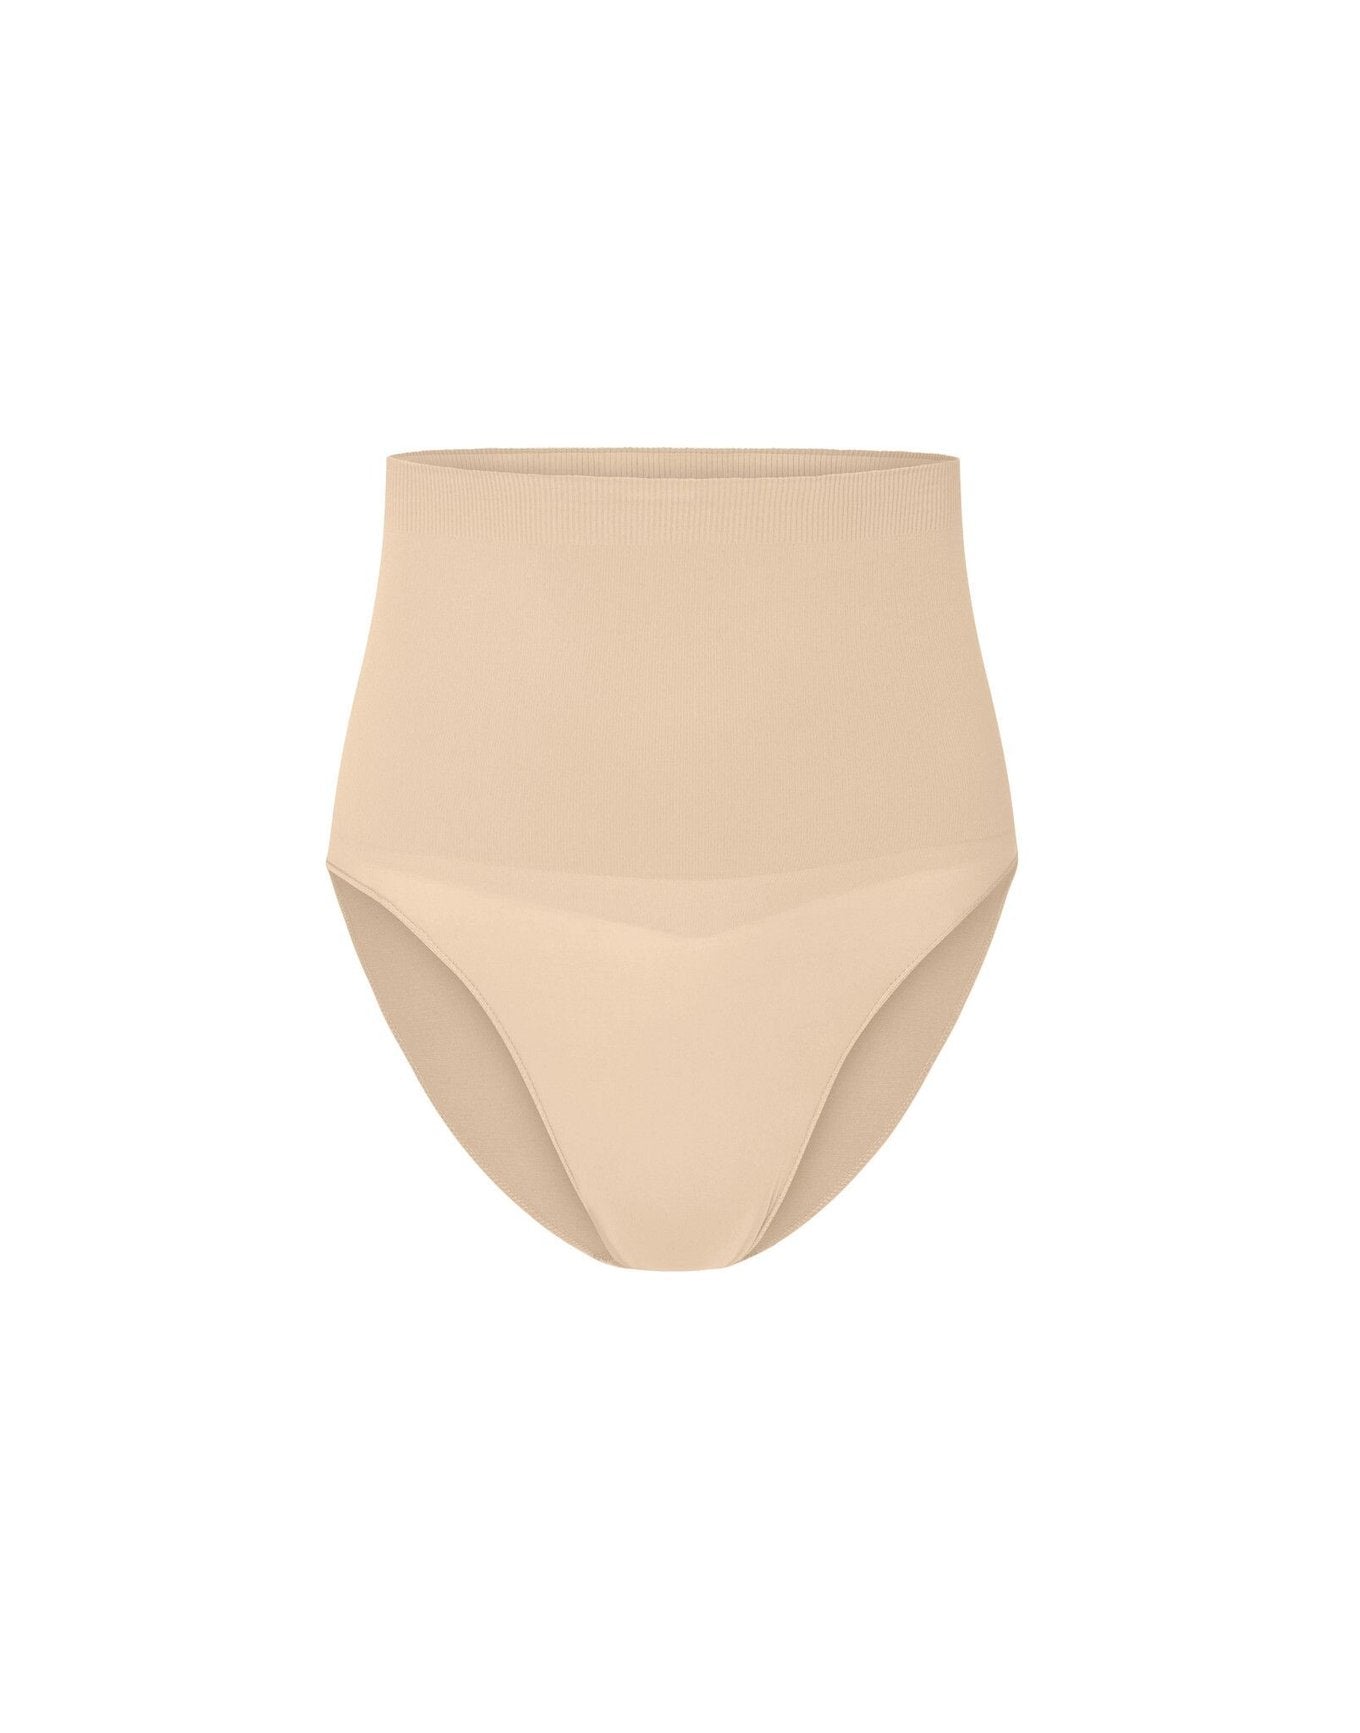 nueskin Hayley High-Compression High-Waist Bikini Brief in color Dawn and shape high waisted